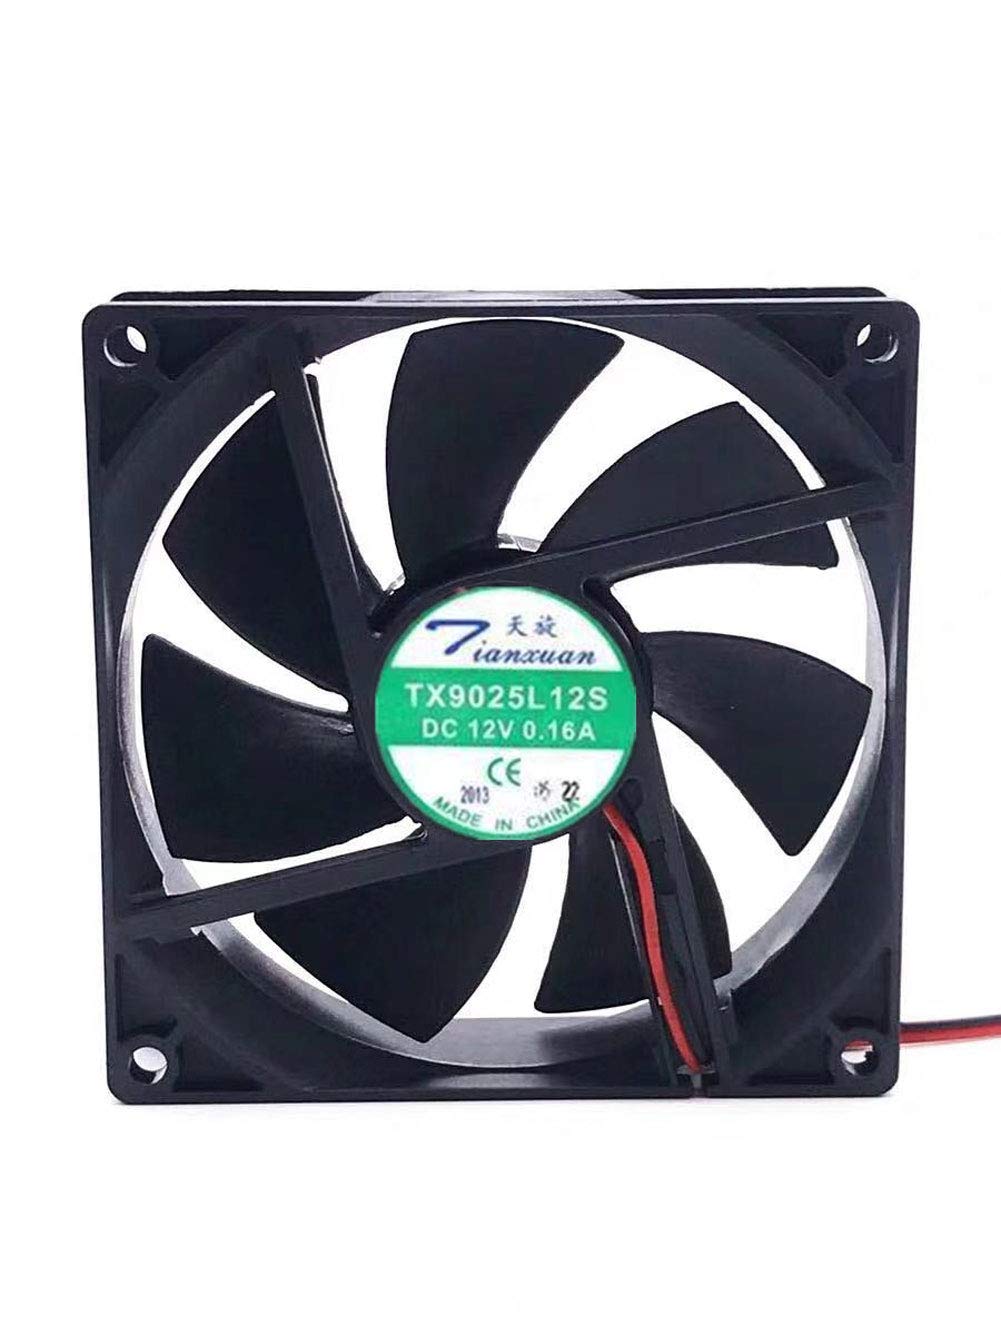  [AUSTRALIA] - TX9025L12S 9cm 90mm DC 12V 0.16A 909025 mm axial Computer case Cooling Fan